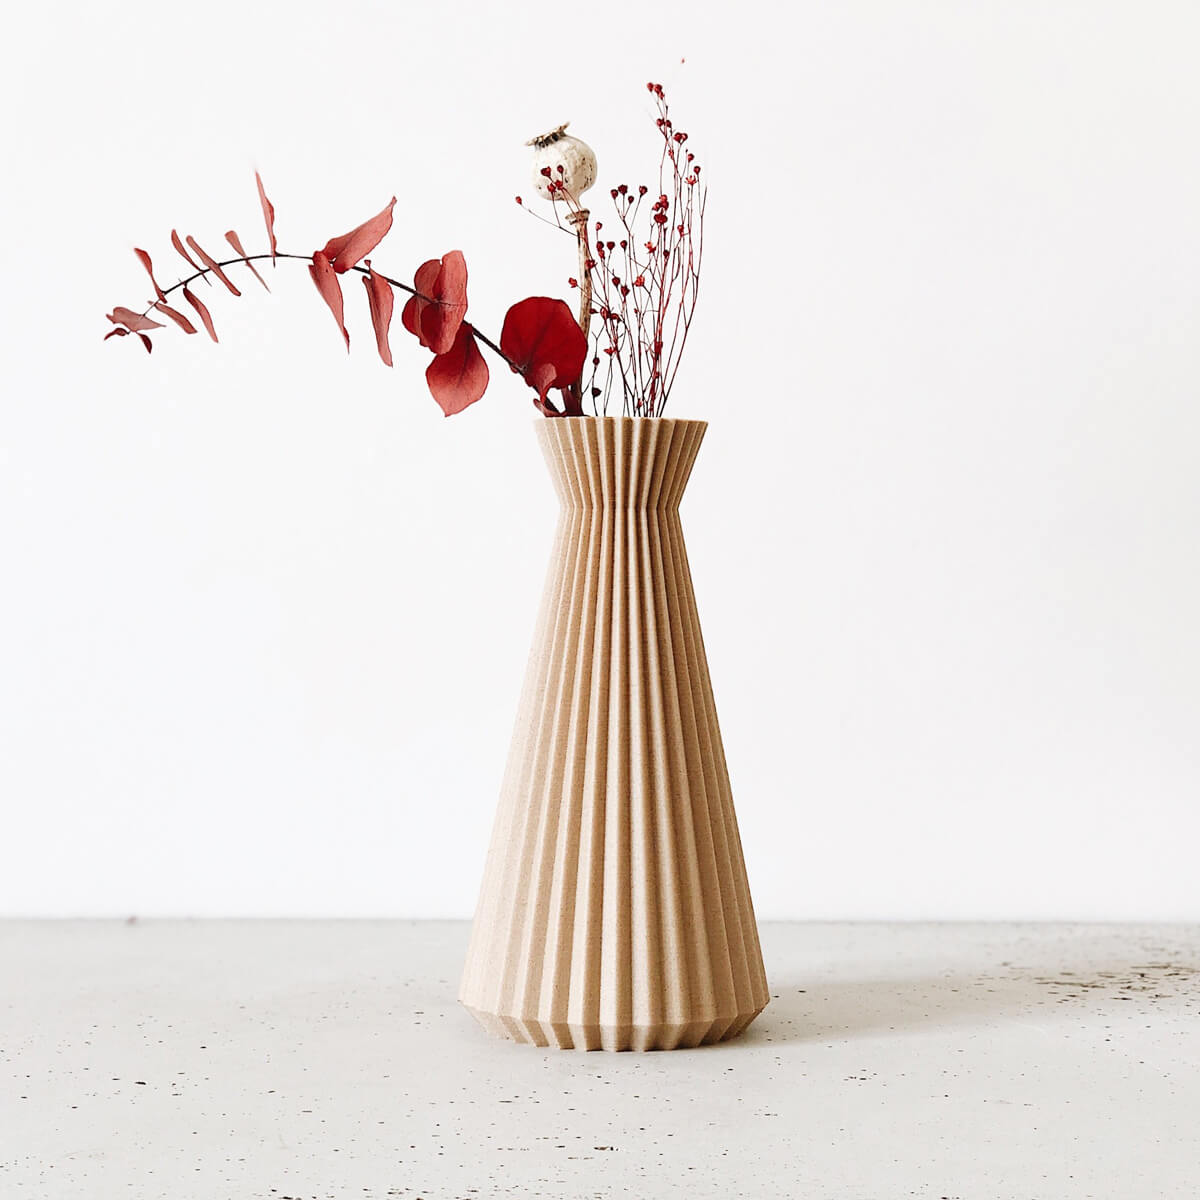 Ishi Vase, Natural | Curious Makers